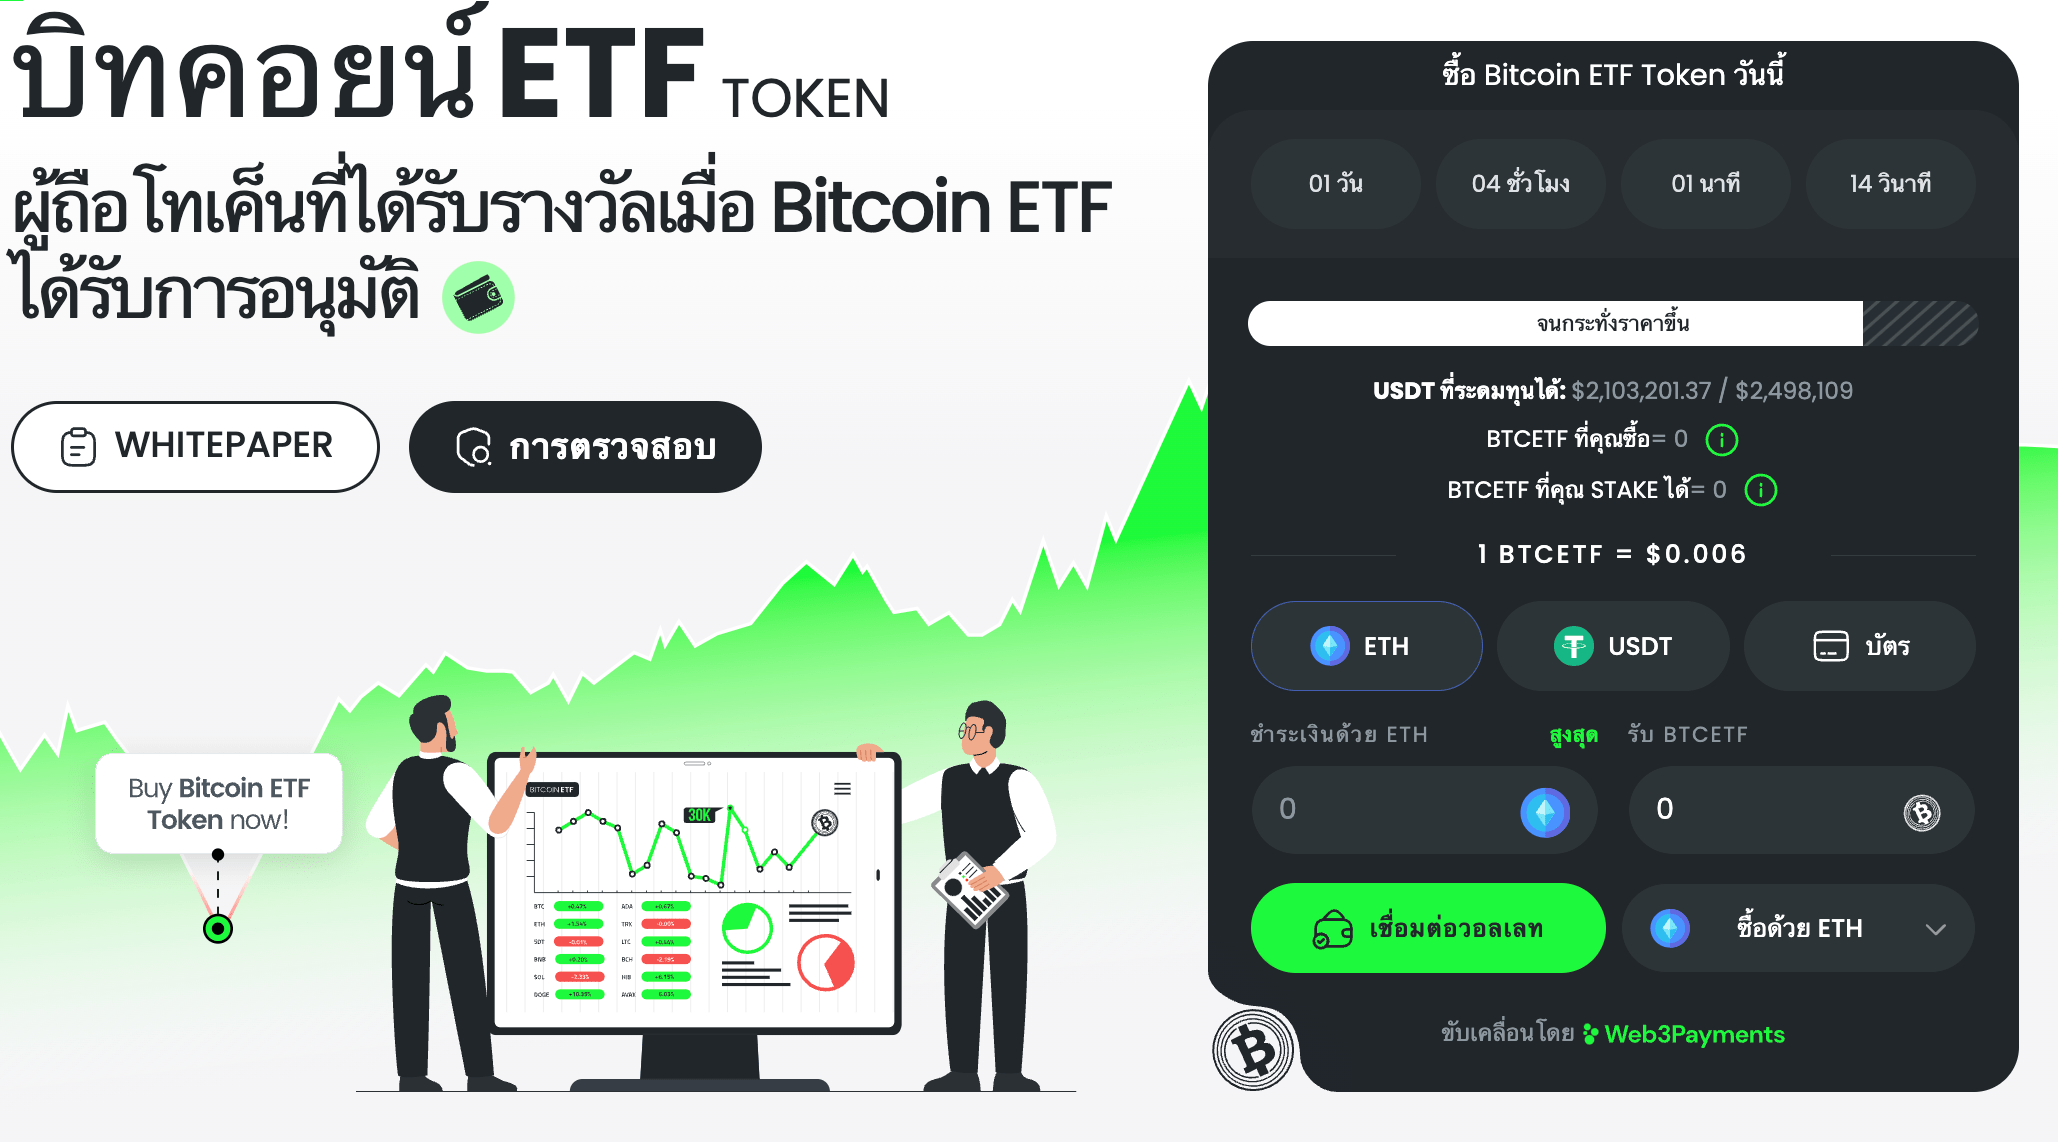 Bitcoin ETF Token เหรียญคริปโตมาใหม่ เหรียญใหม่ๆ